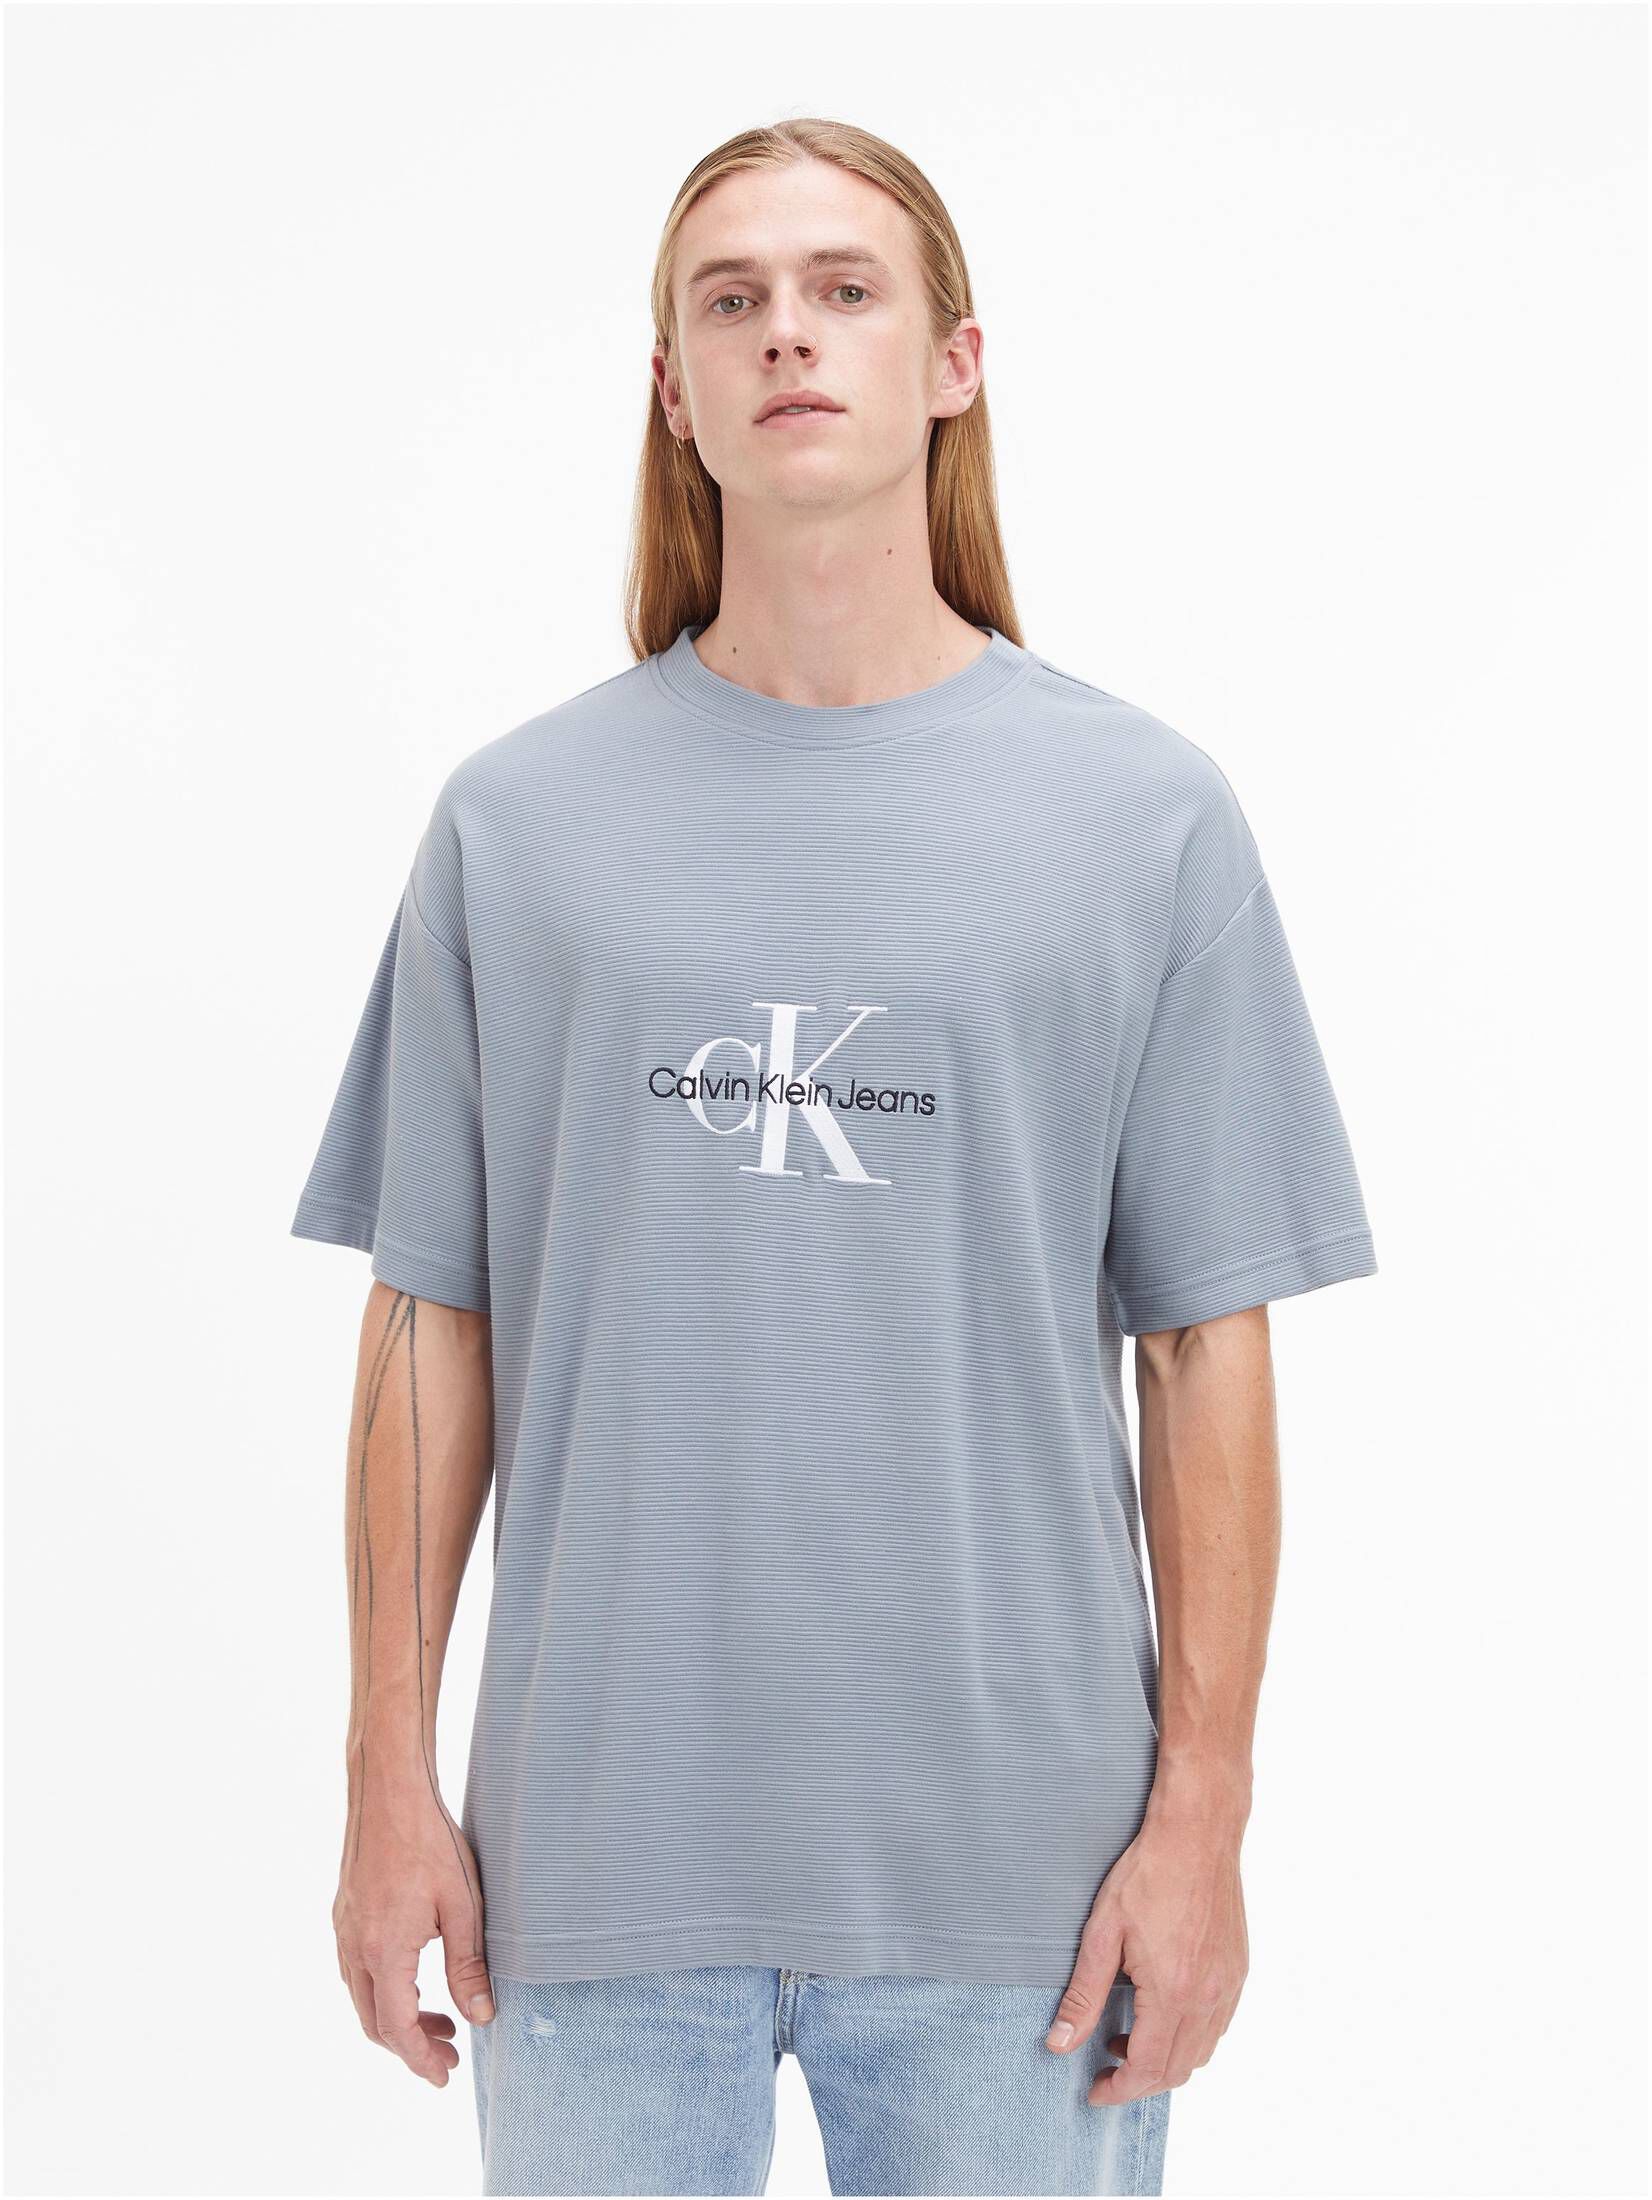 CALVIN KLEIN | engelhorn MONOLOGO OTTOMAN Herren JEANS kaufen TEE RIB T-Shirt